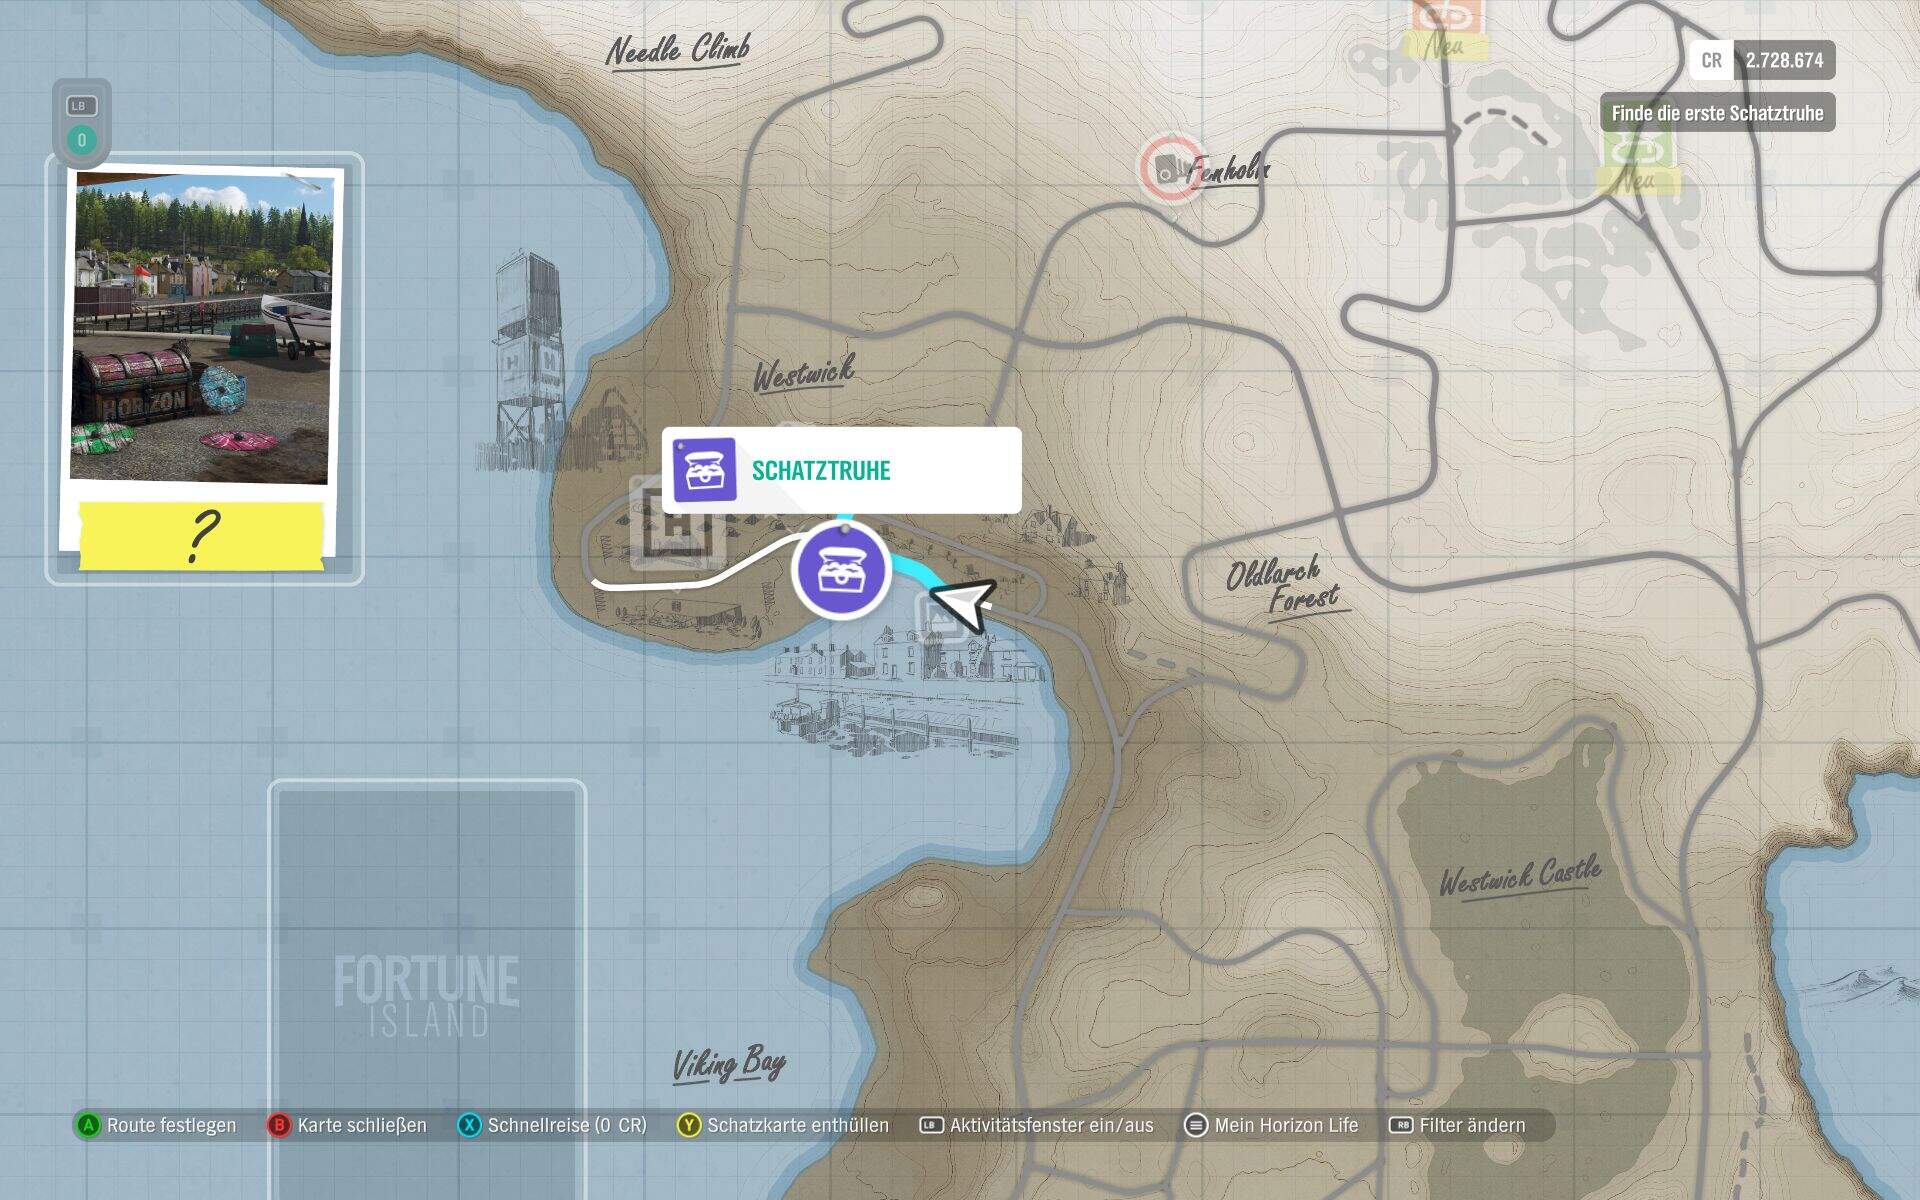 Forza horizon 4 island. Forza Horizon 4 Fortune Island. Forza Horizon 4 остров сокровищ карта. Карта сокровищ Forza Horizon 4 Fortune Island. Карта Фортун Forza Horizon 4 Fortune Island.